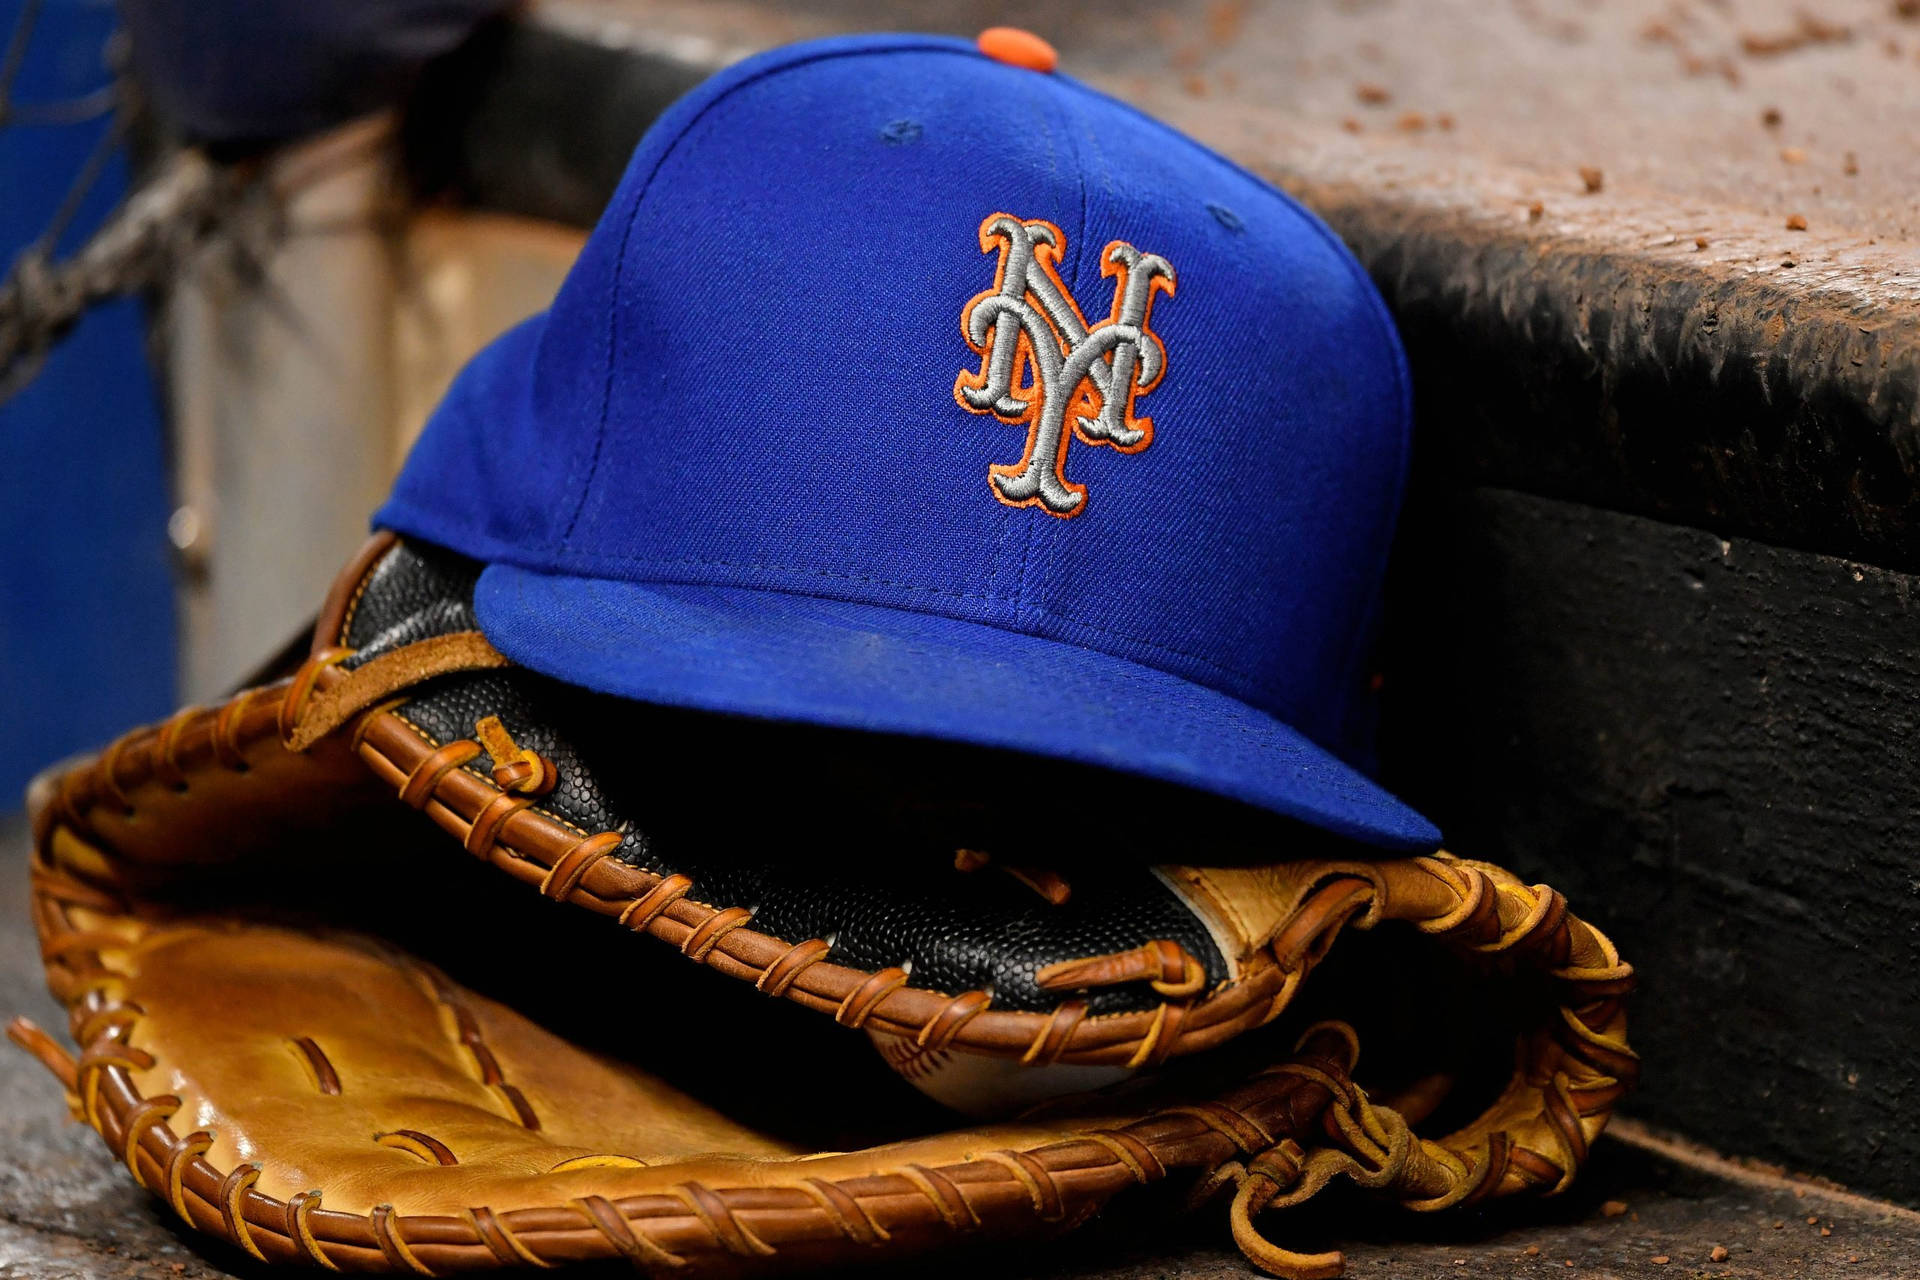 New York Mets Football Glove Background